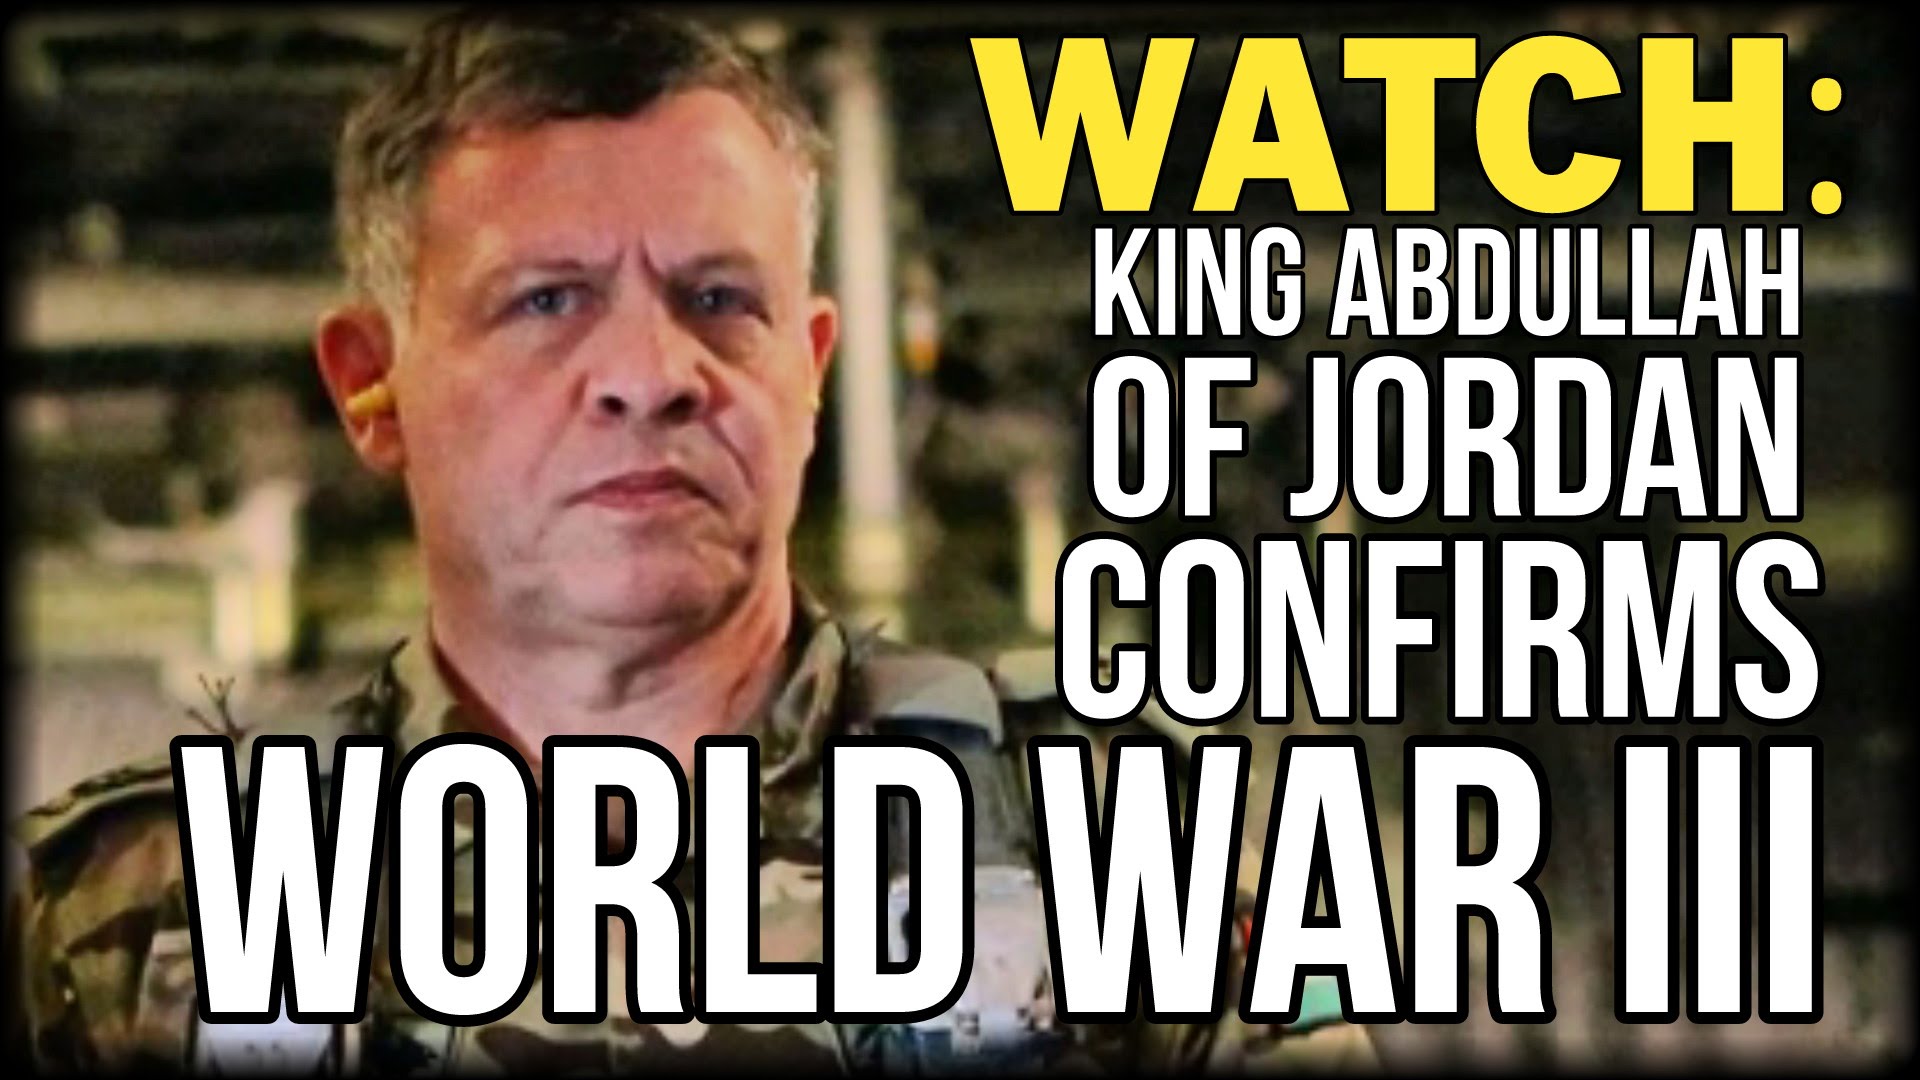 WATCH: WORLD WAR III CONFIRMED BY KING ABDULLAH OF JORDAN